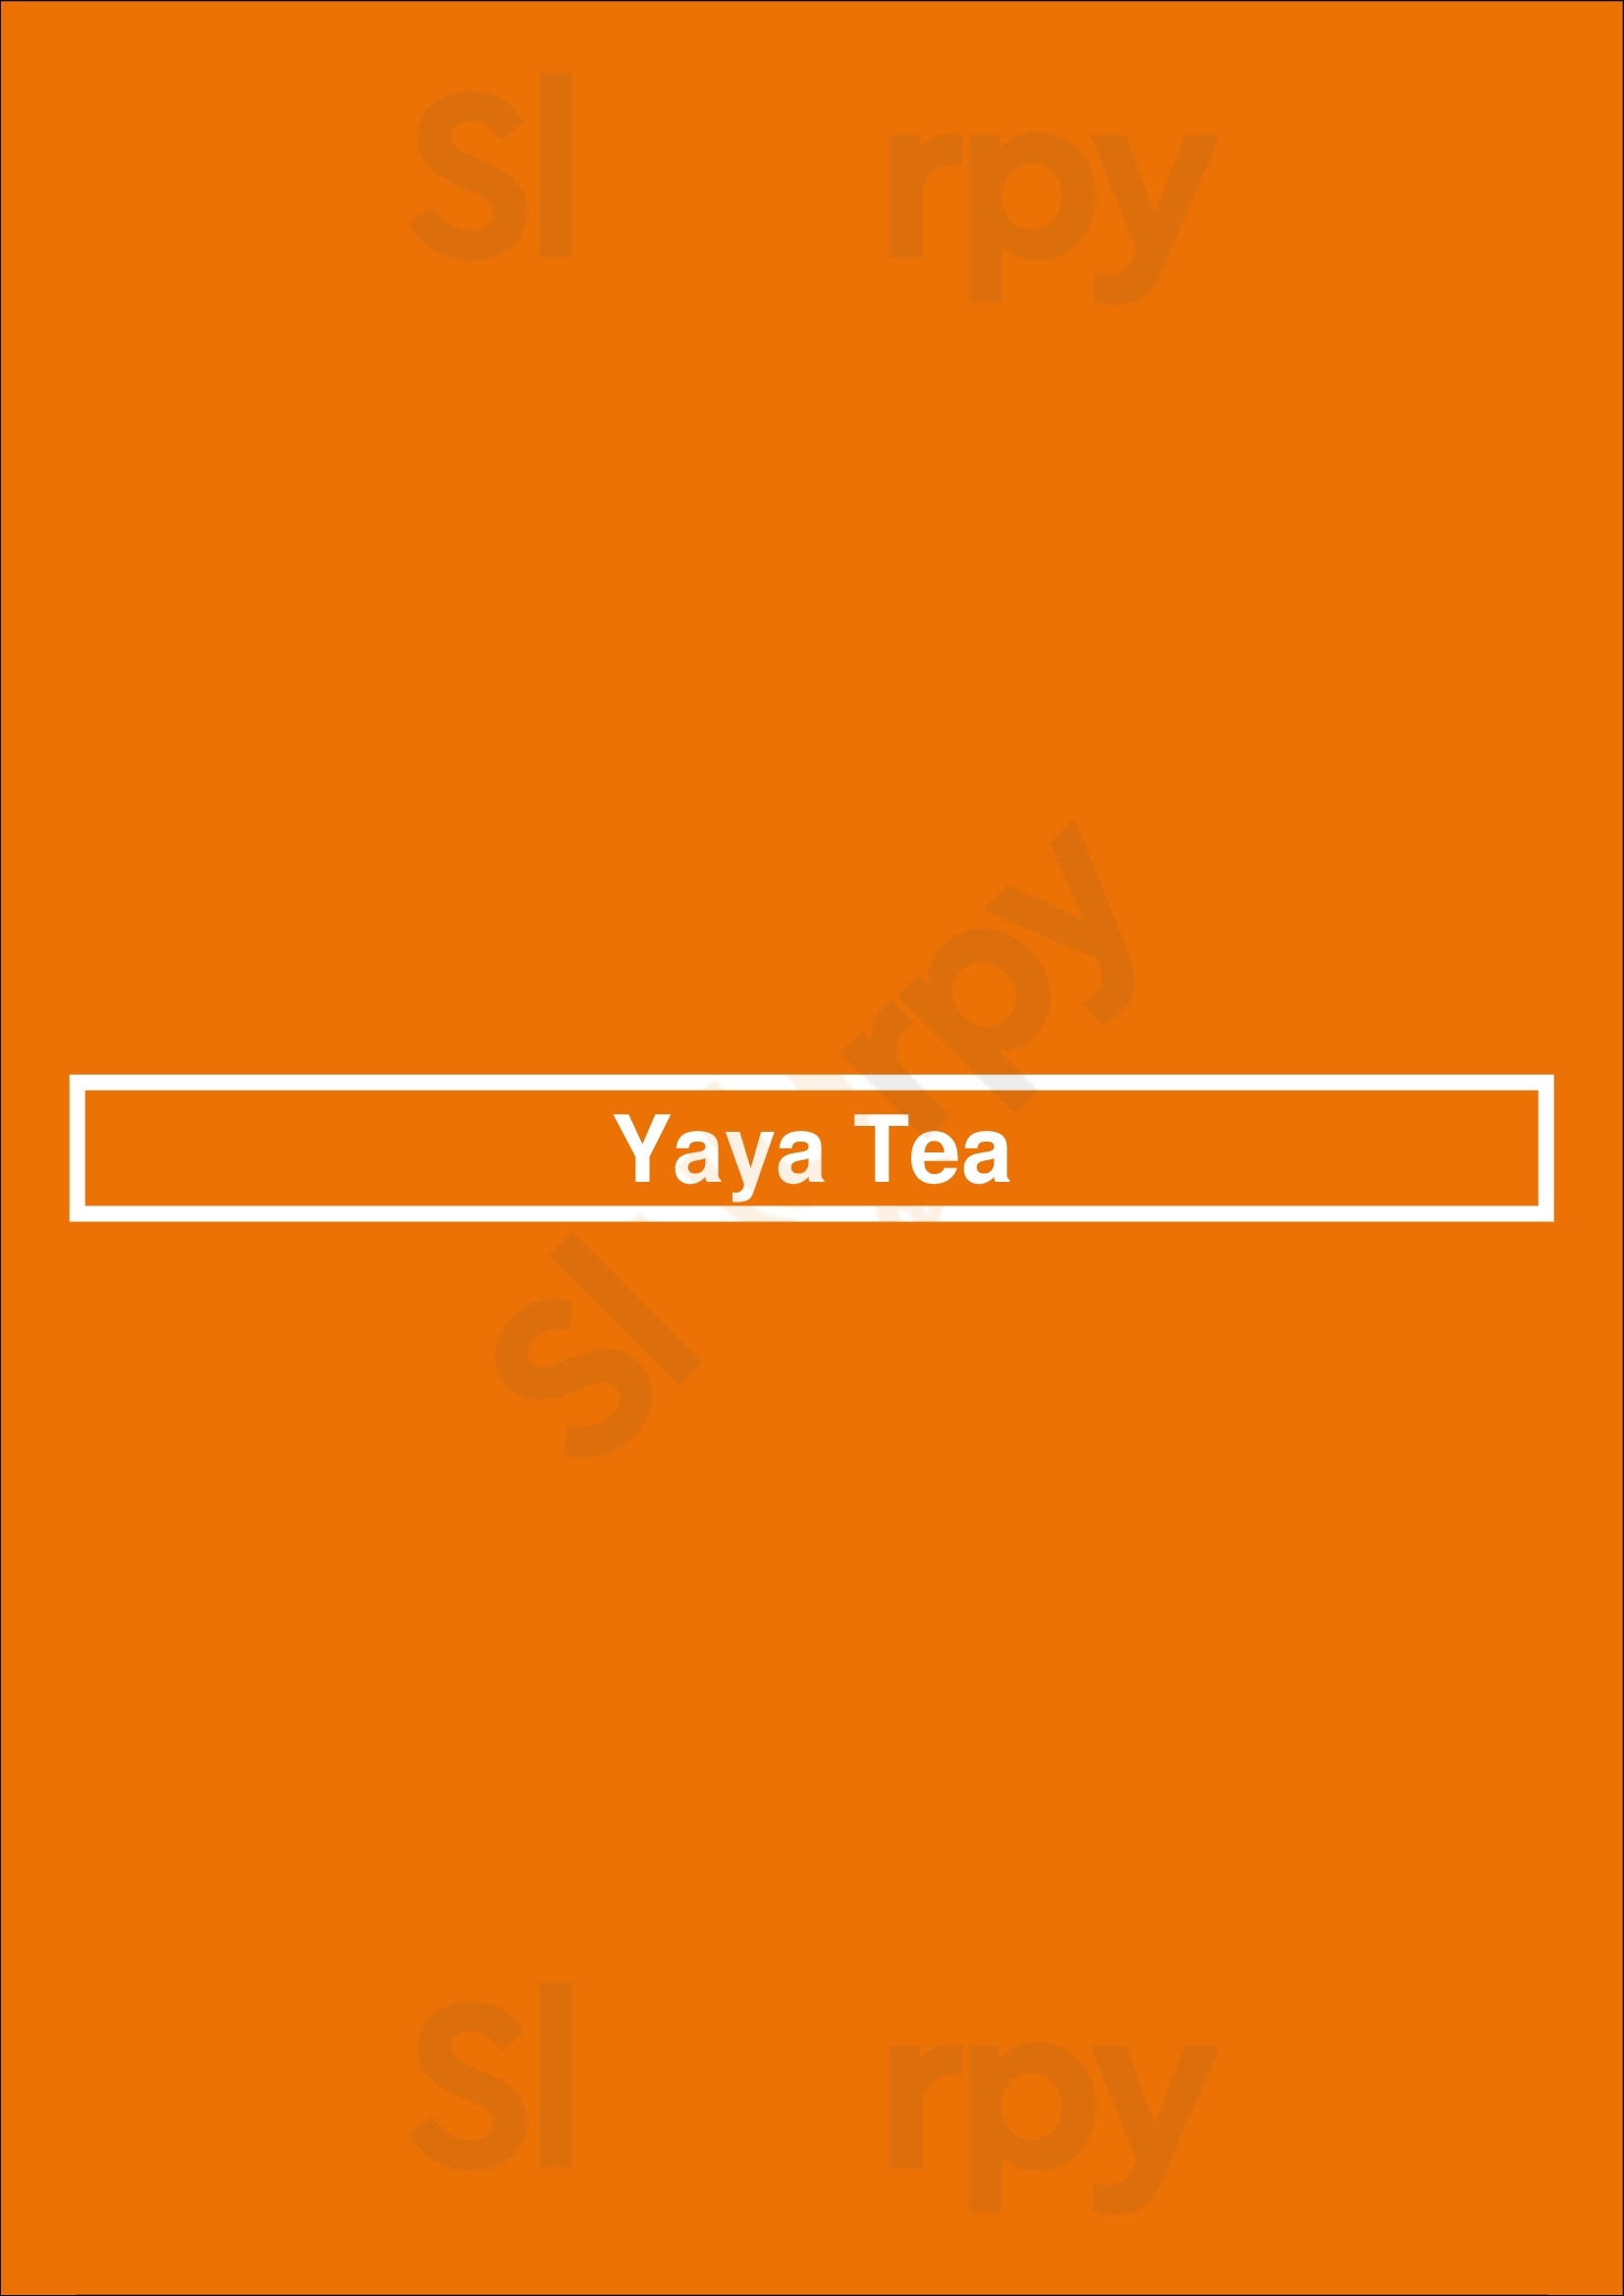 Yaya Tea New York City Menu - 1